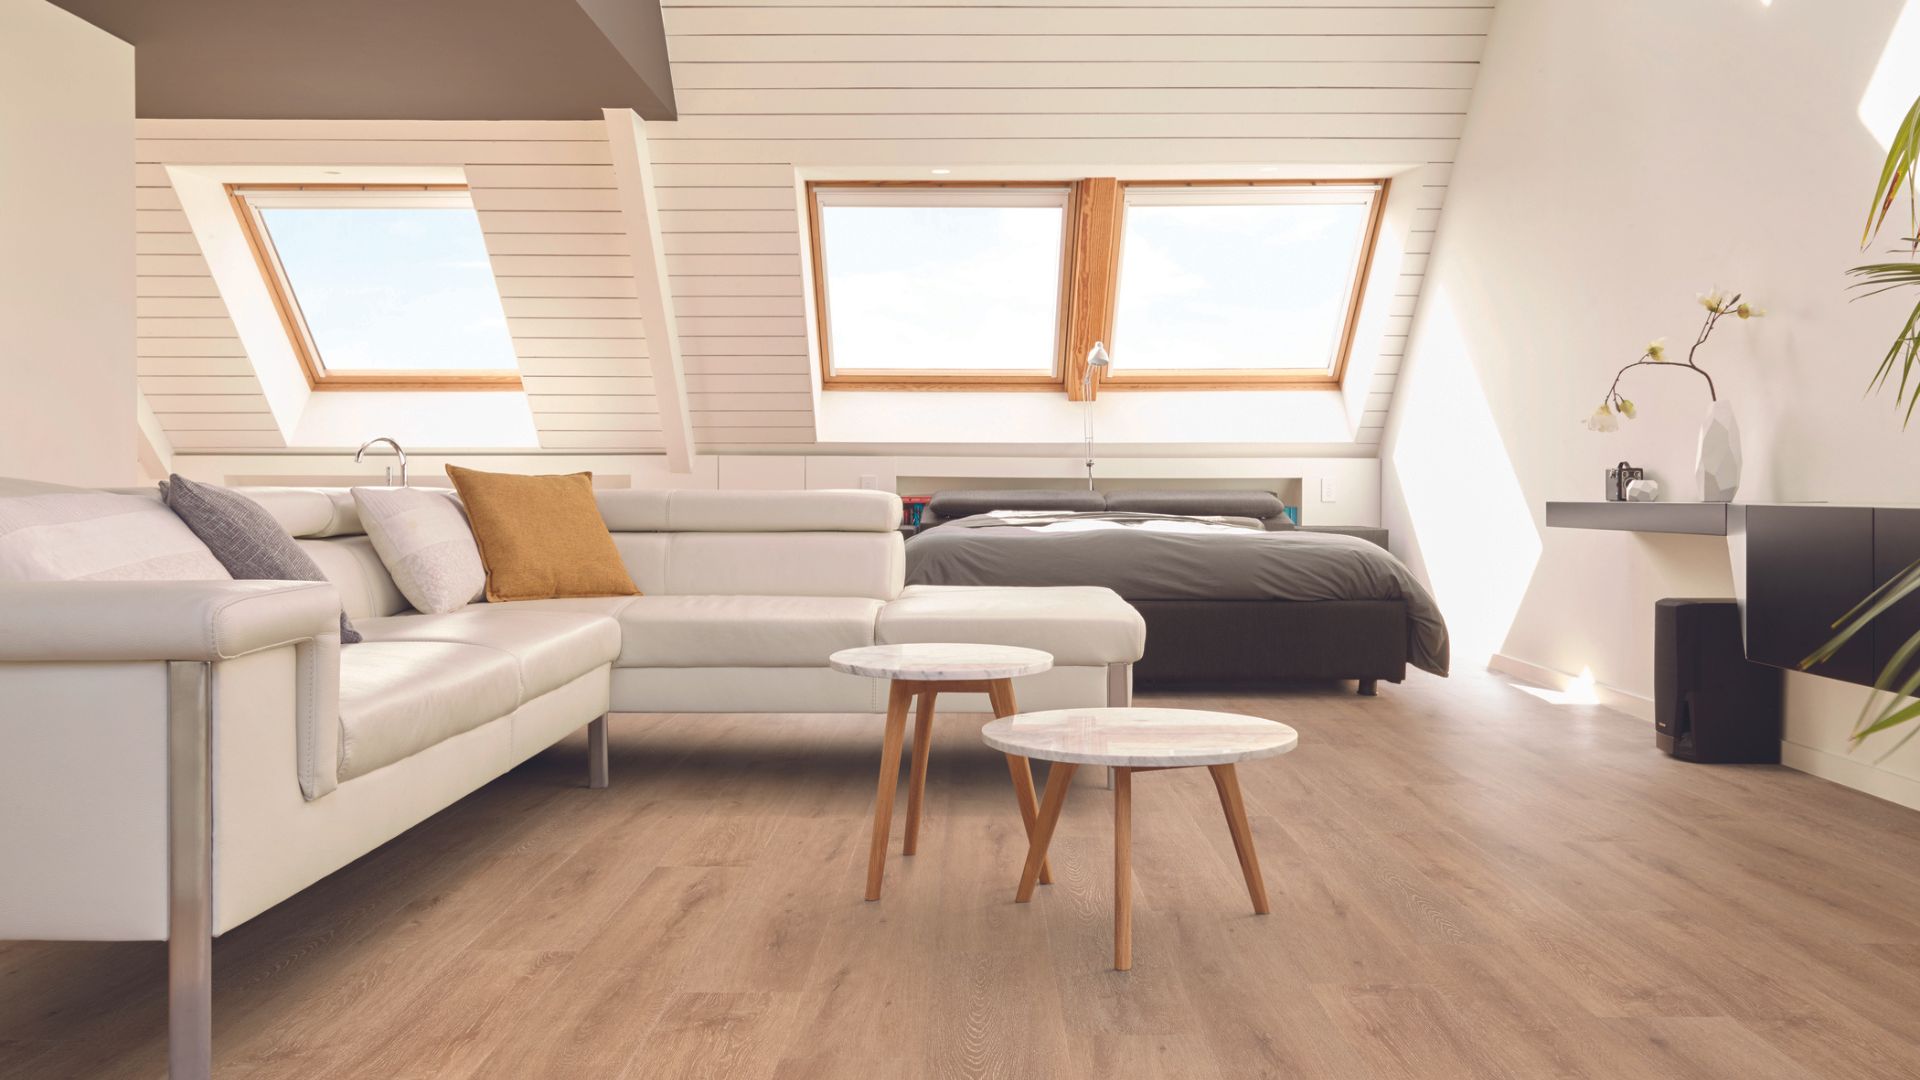 Luxury vinyl plank flooring in a living room.